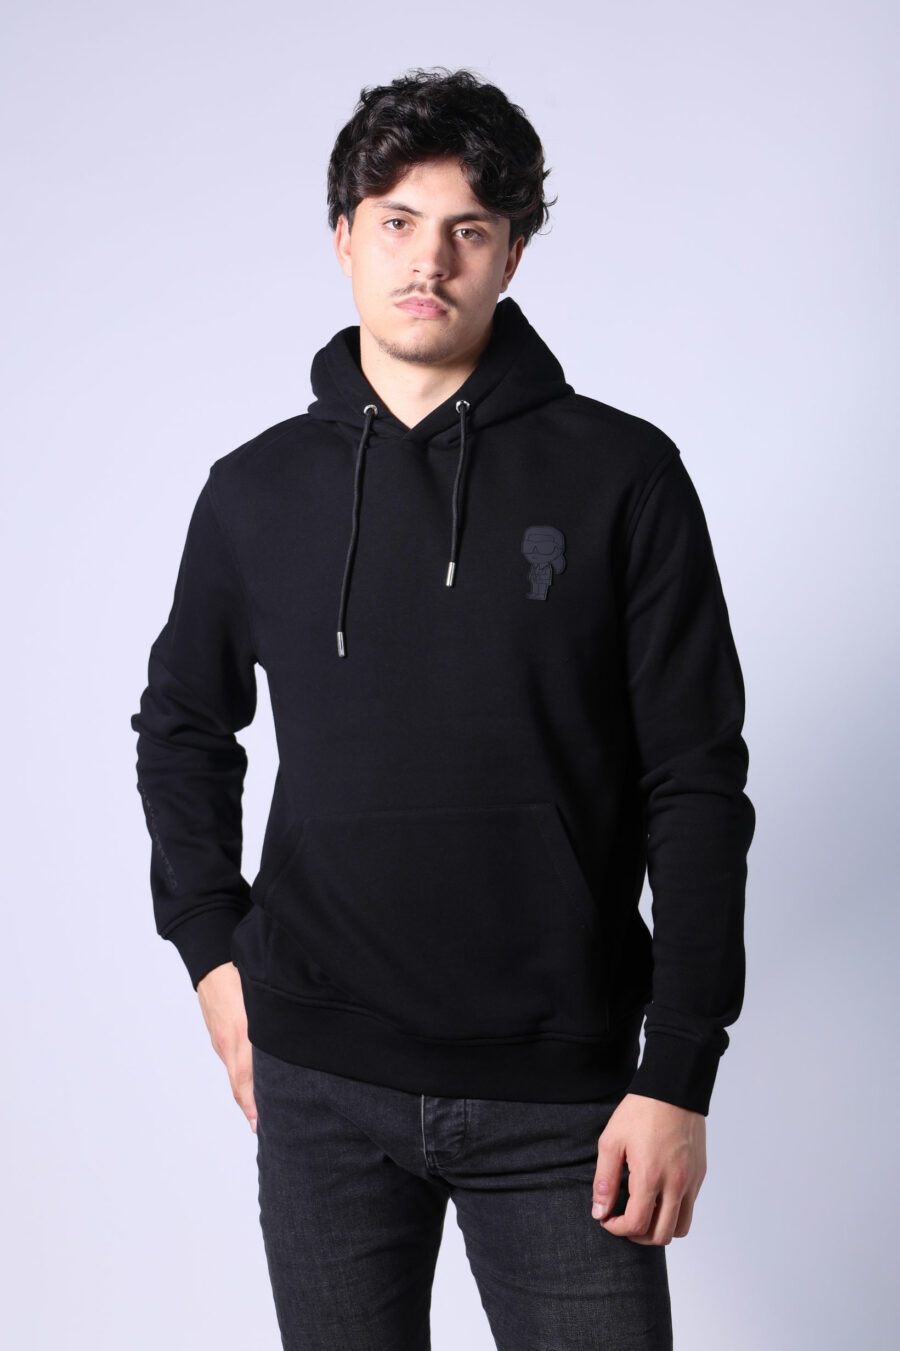 Black hooded sweatshirt with monochrome rubber mini logo - Untitled Catalog 05768